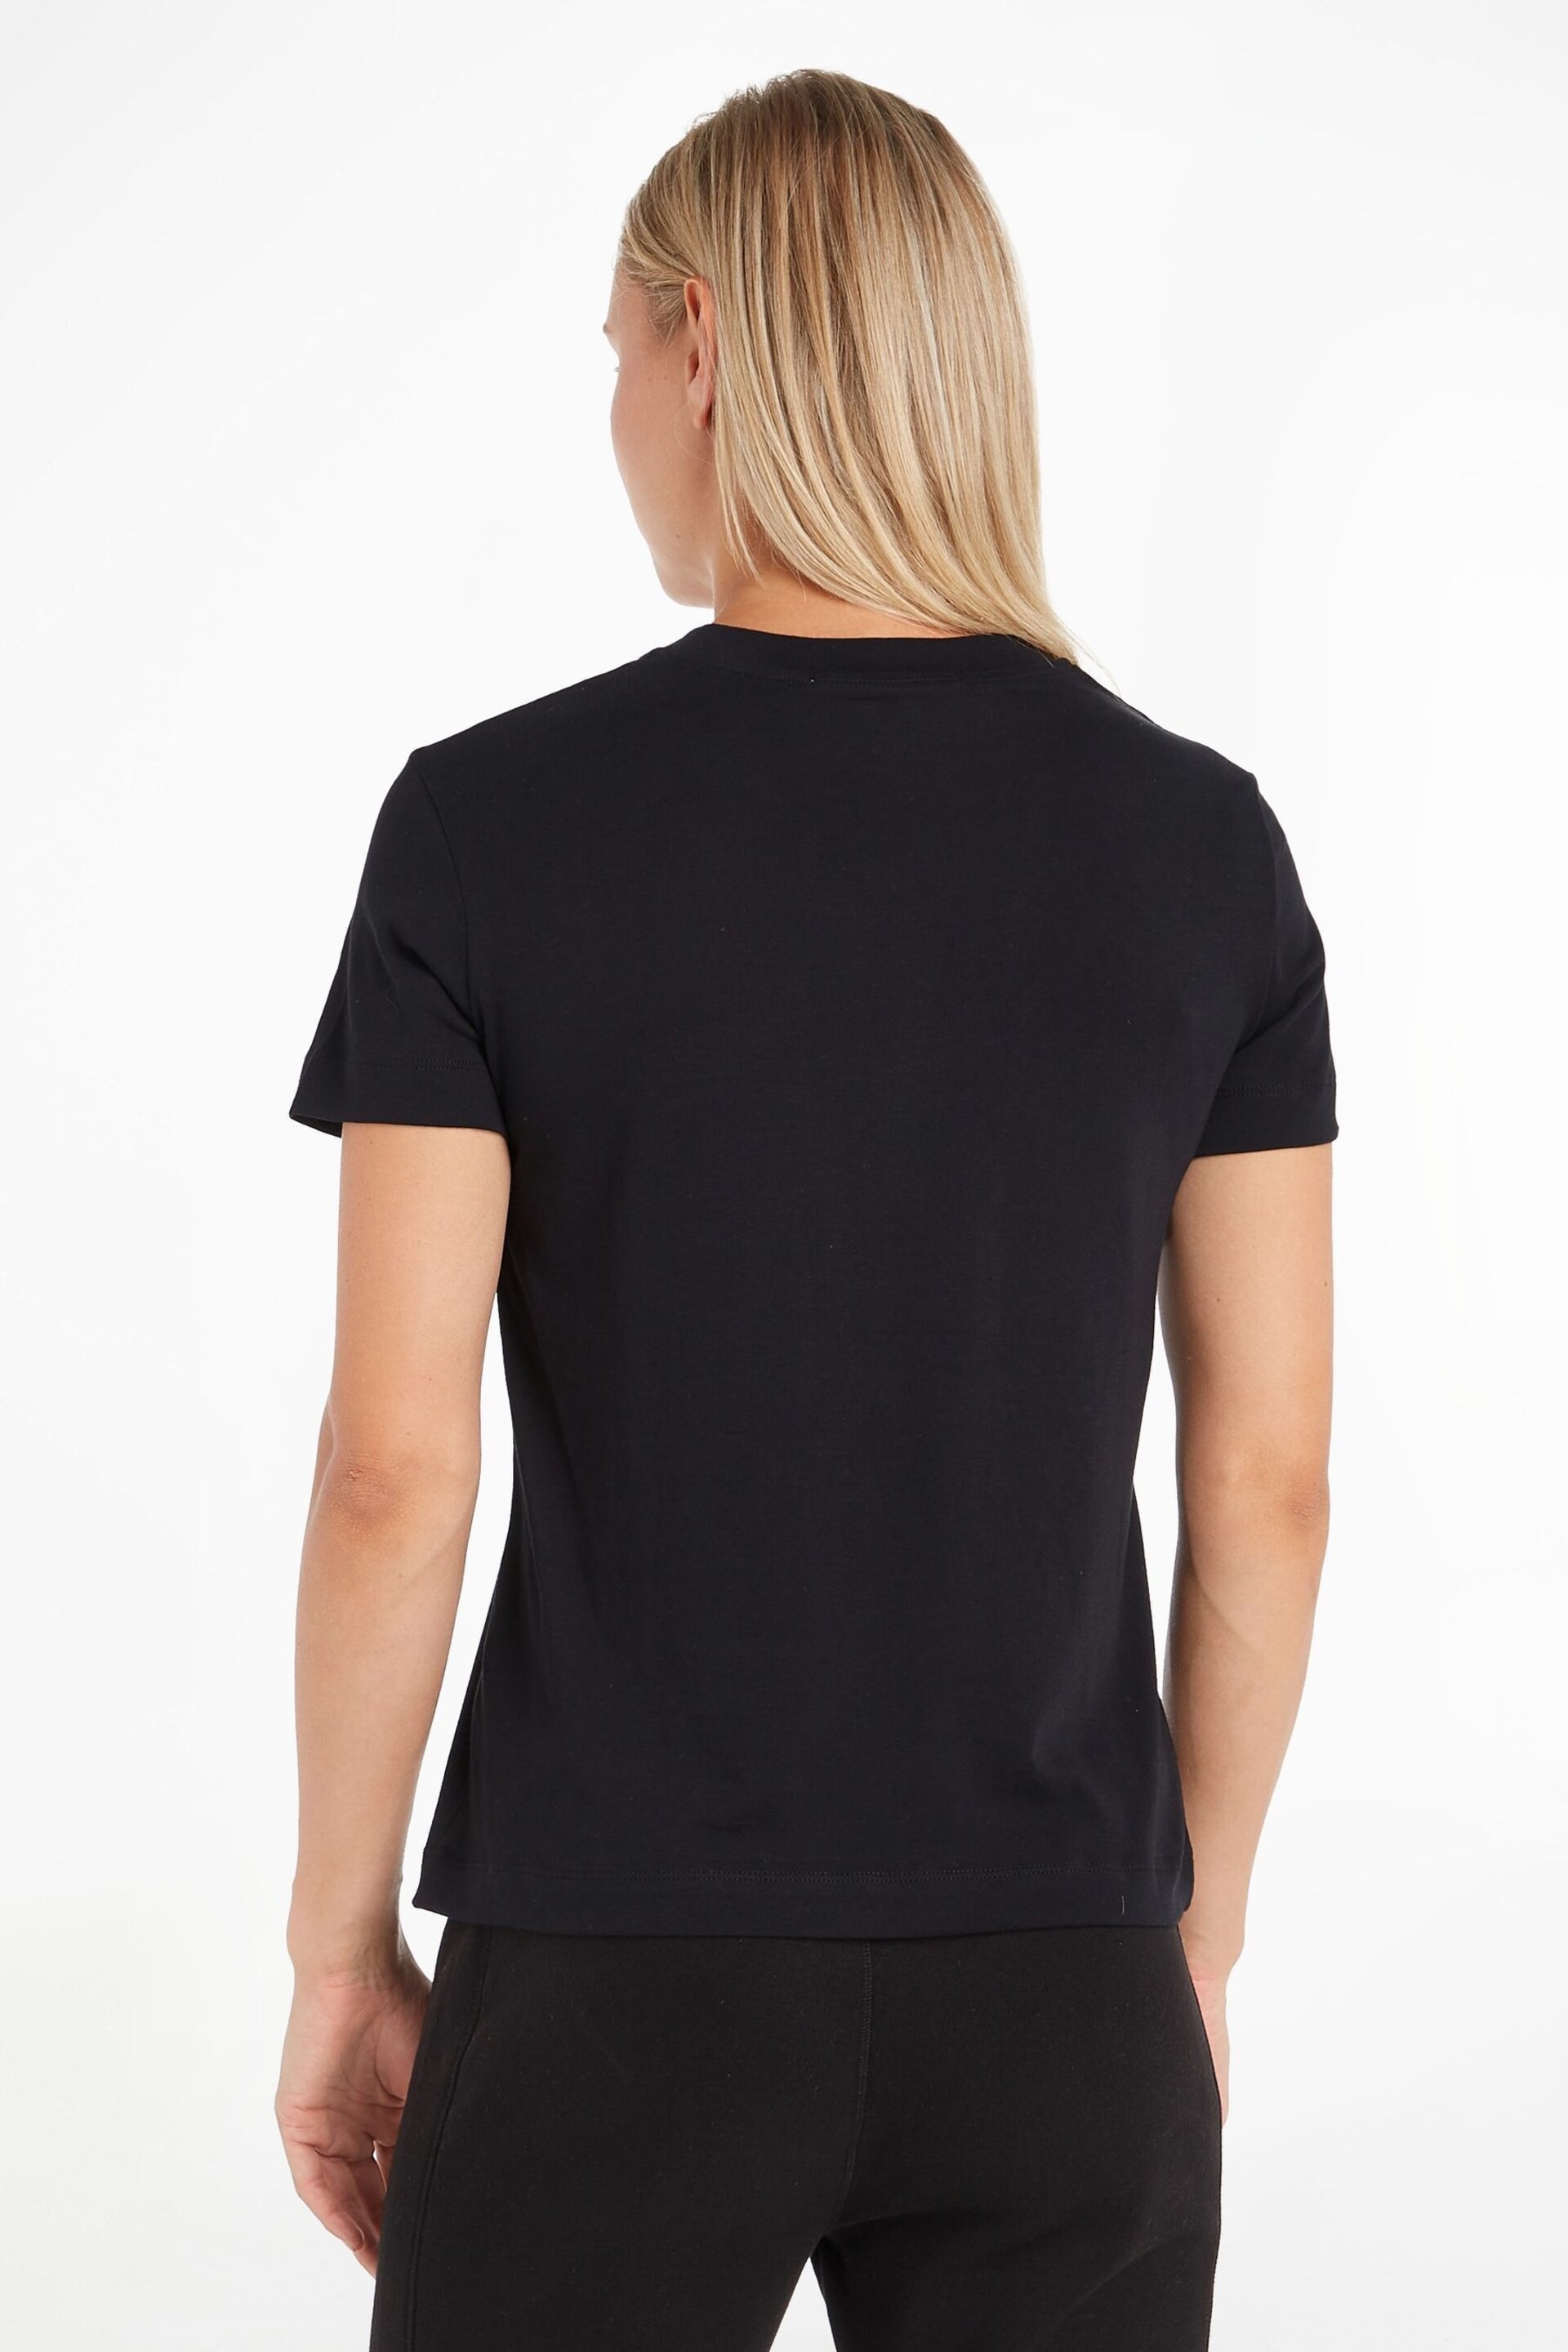 Calvin Klein Jeans Black Core Monogram Regular T-Shirt - Image 2 of 5